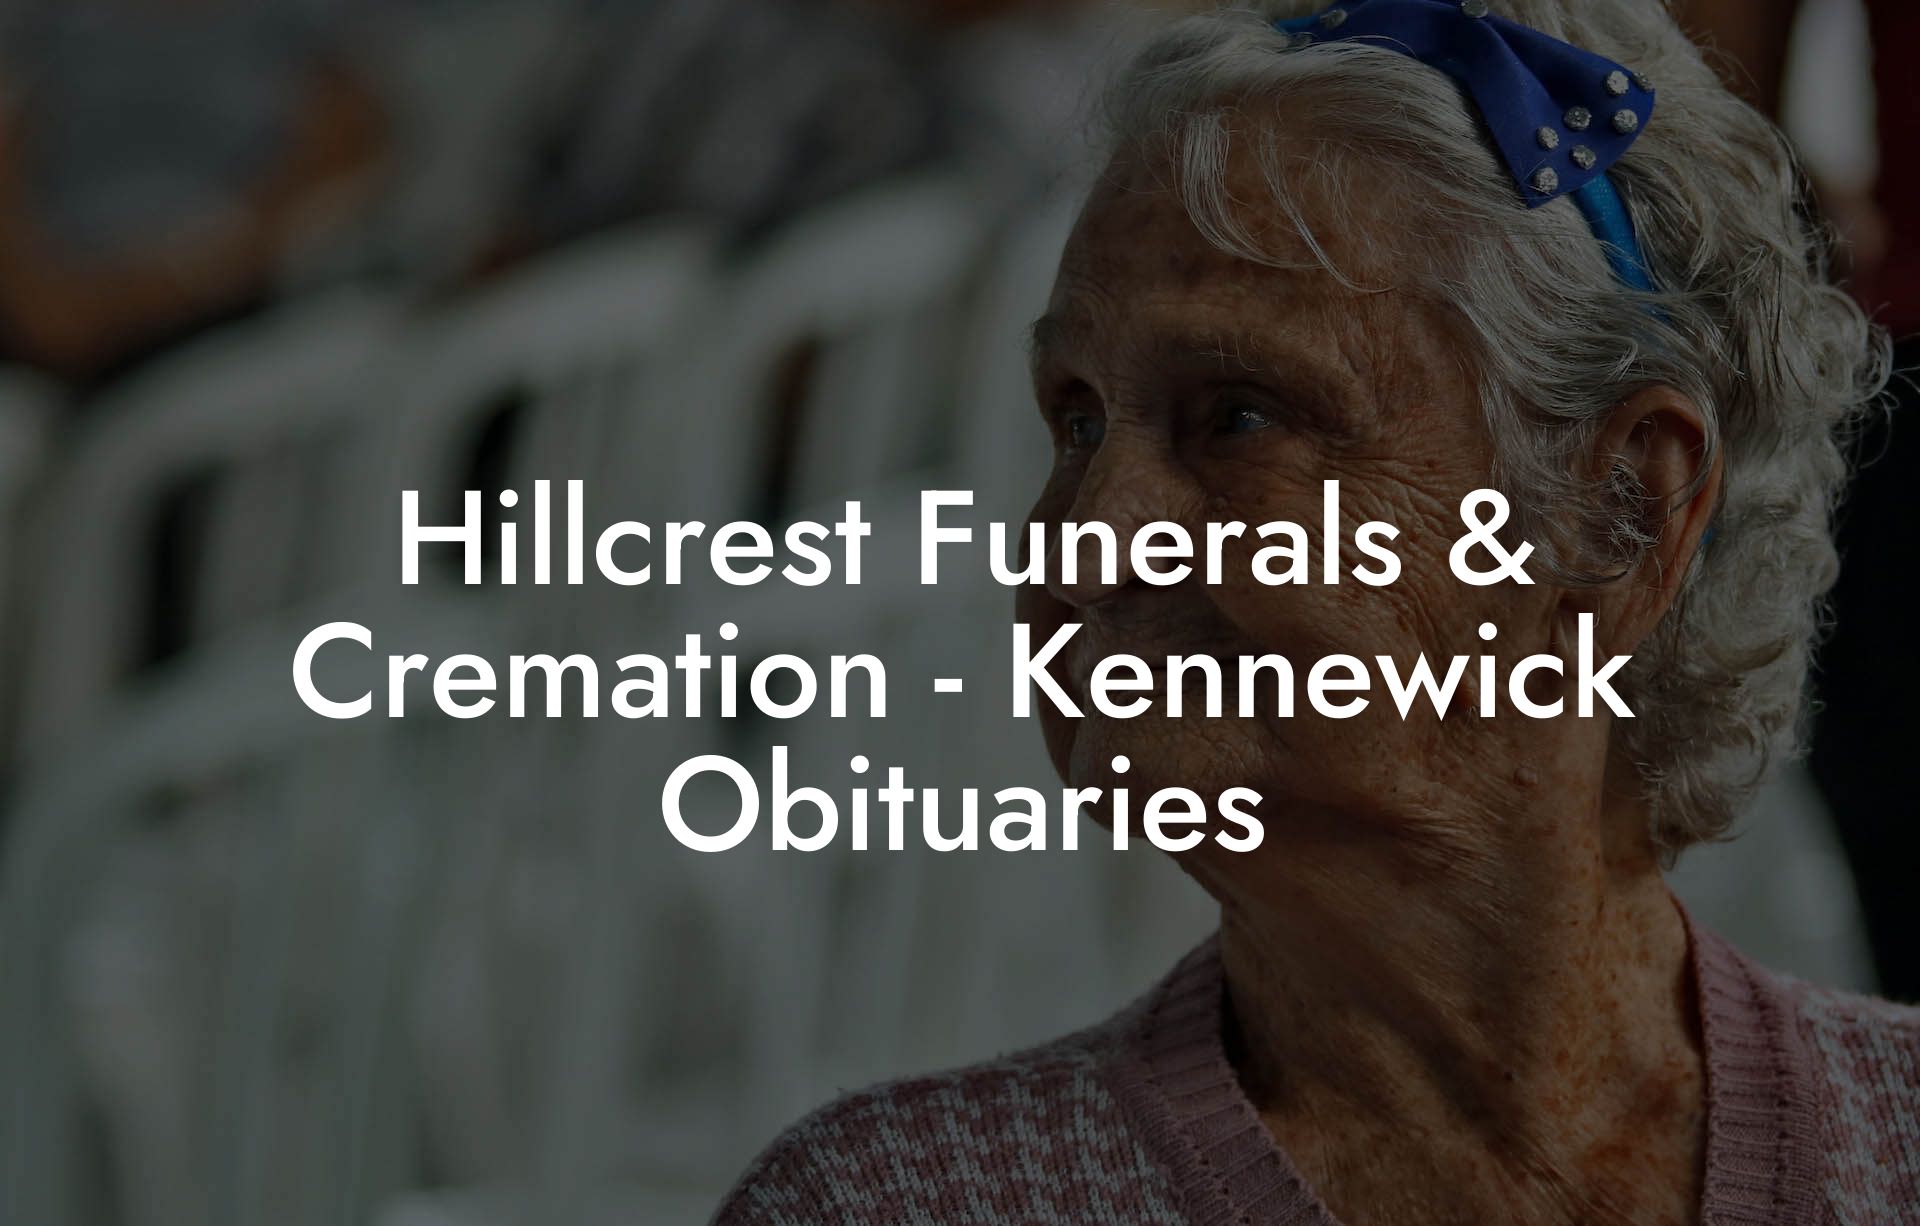 Hillcrest Funerals & Cremation - Kennewick Obituaries